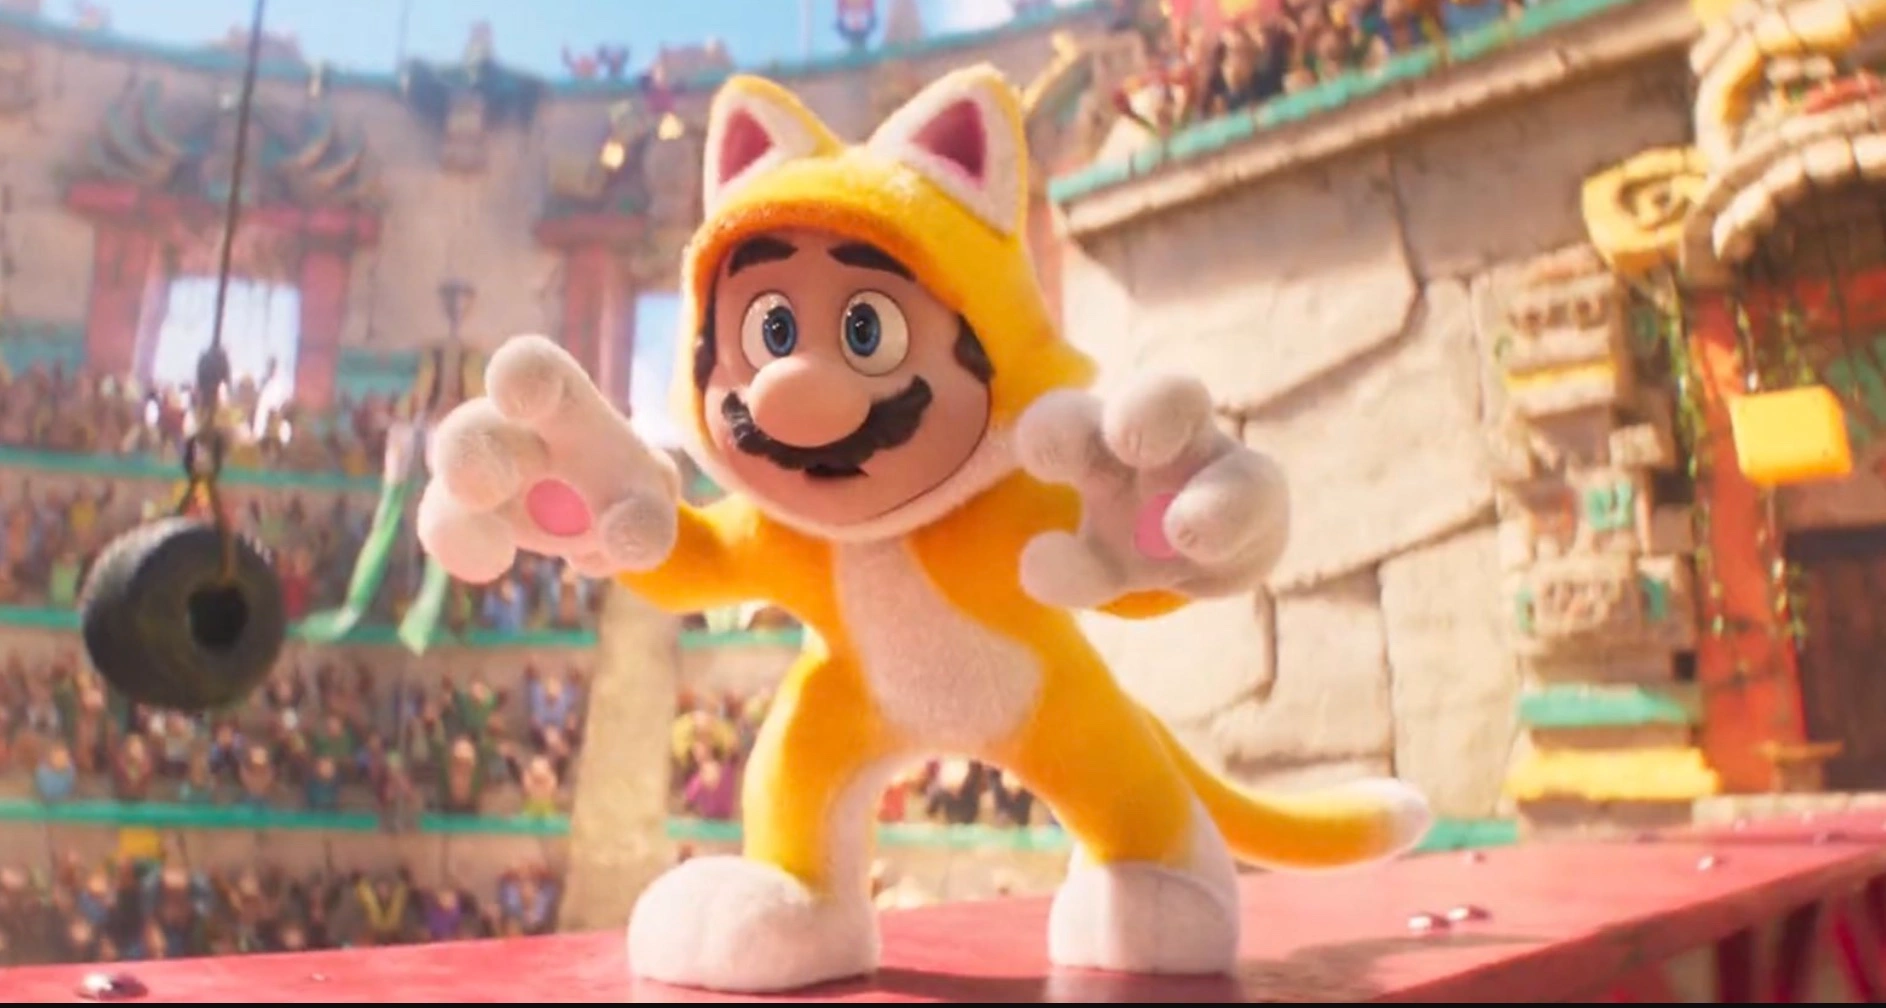 Seth Rogan Appears as Donkey Kong in New Mario Bros. Film Footage.